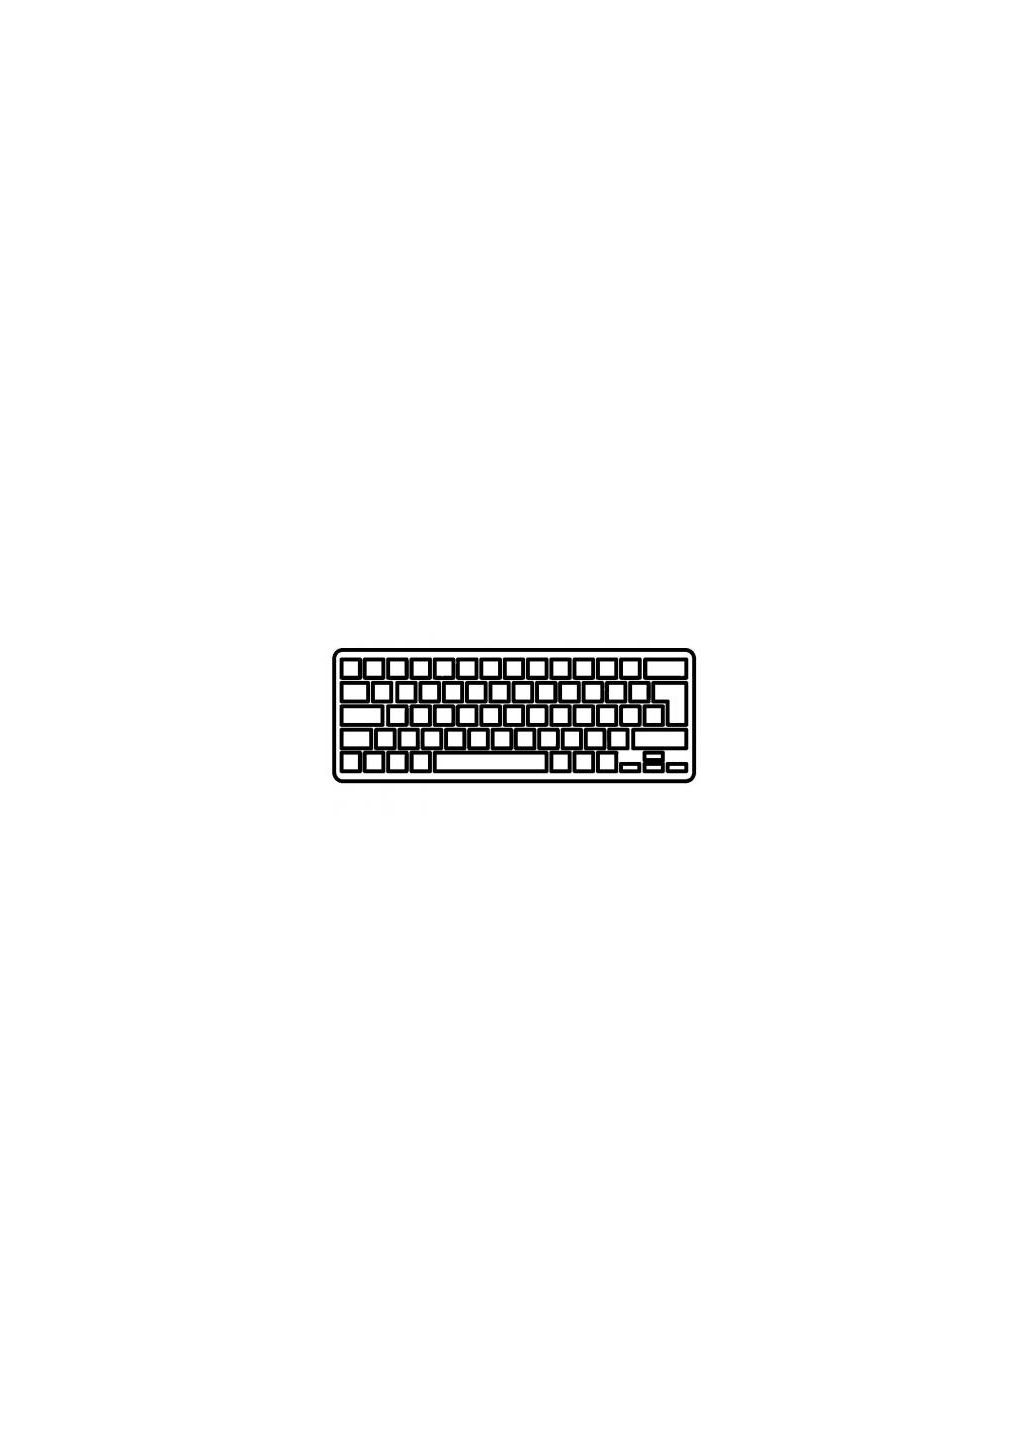 Клавиатура ноутбука (A43453) Acer travelmate 4750 series черная ua (276706603)